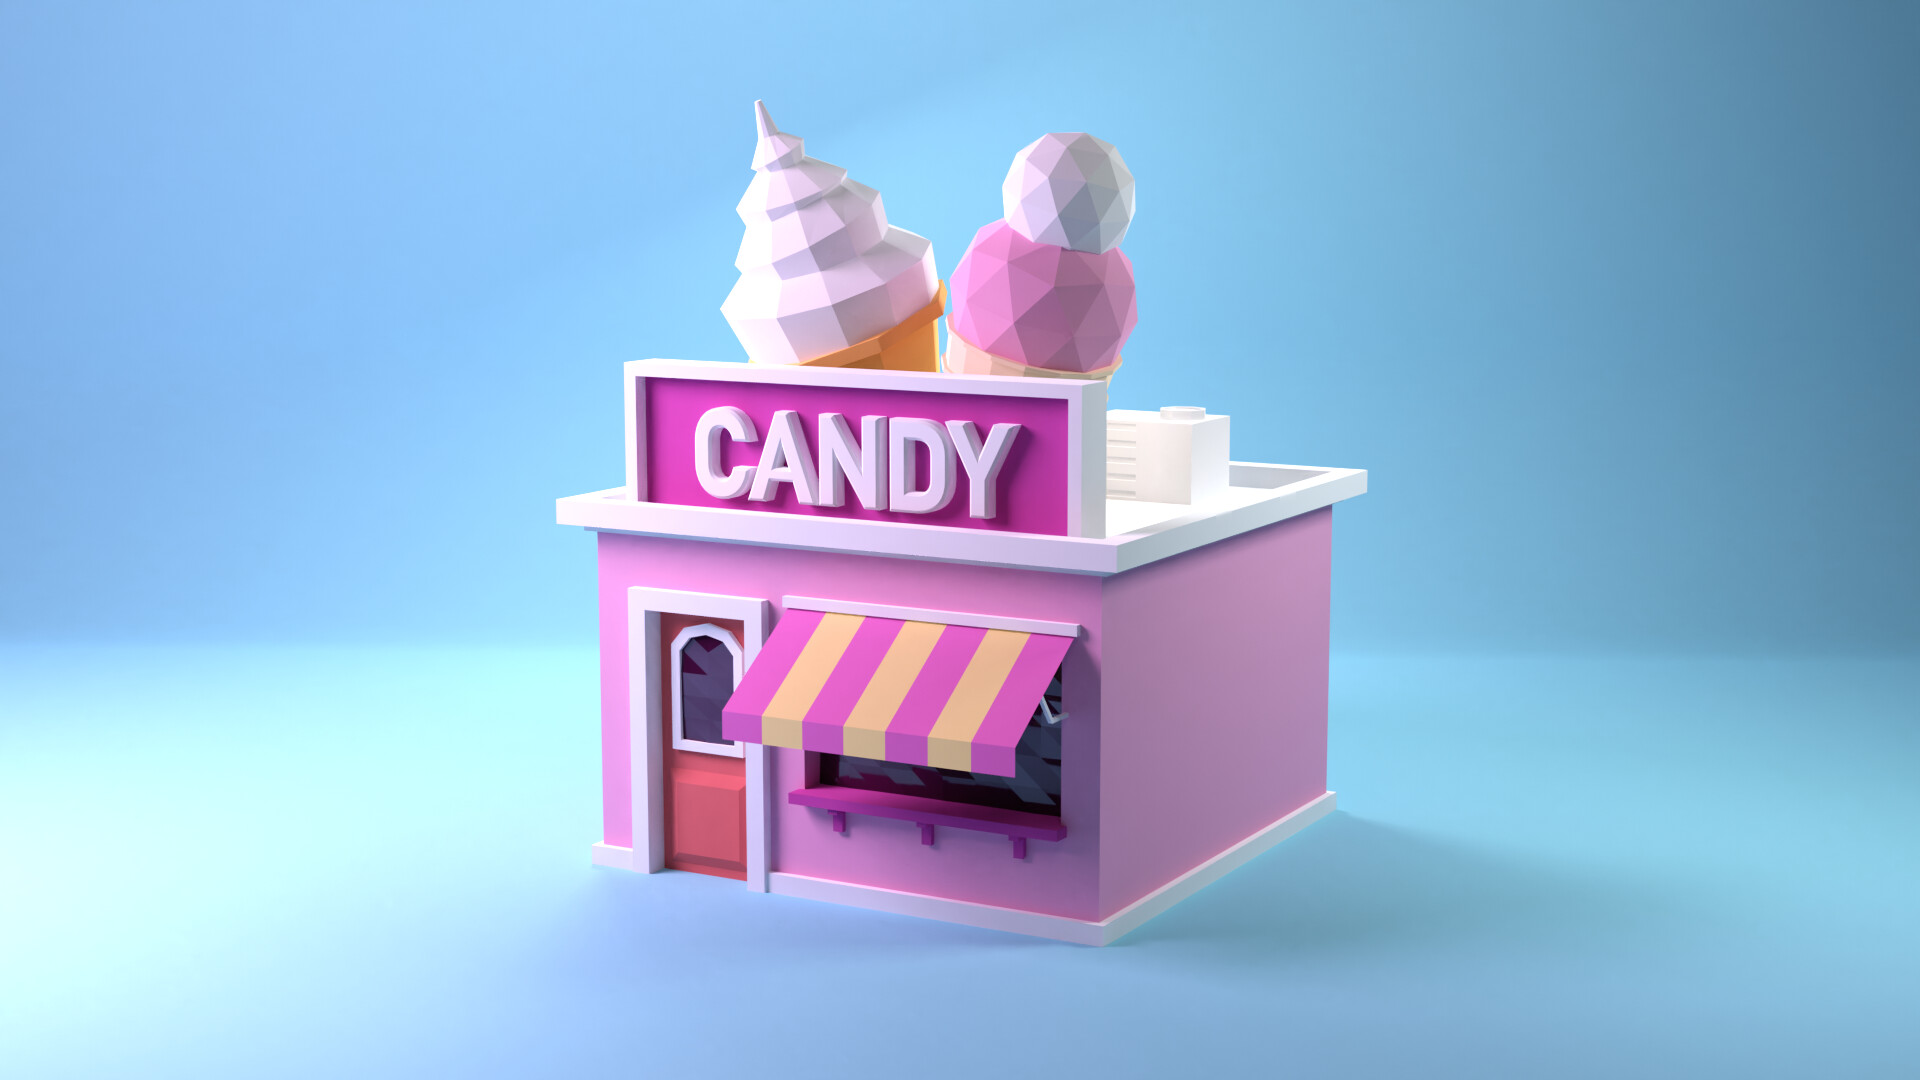 Candy candy shop 1. Candy shop. Candy shop 3d. Candy shop картинки. Магазин 3d арт.